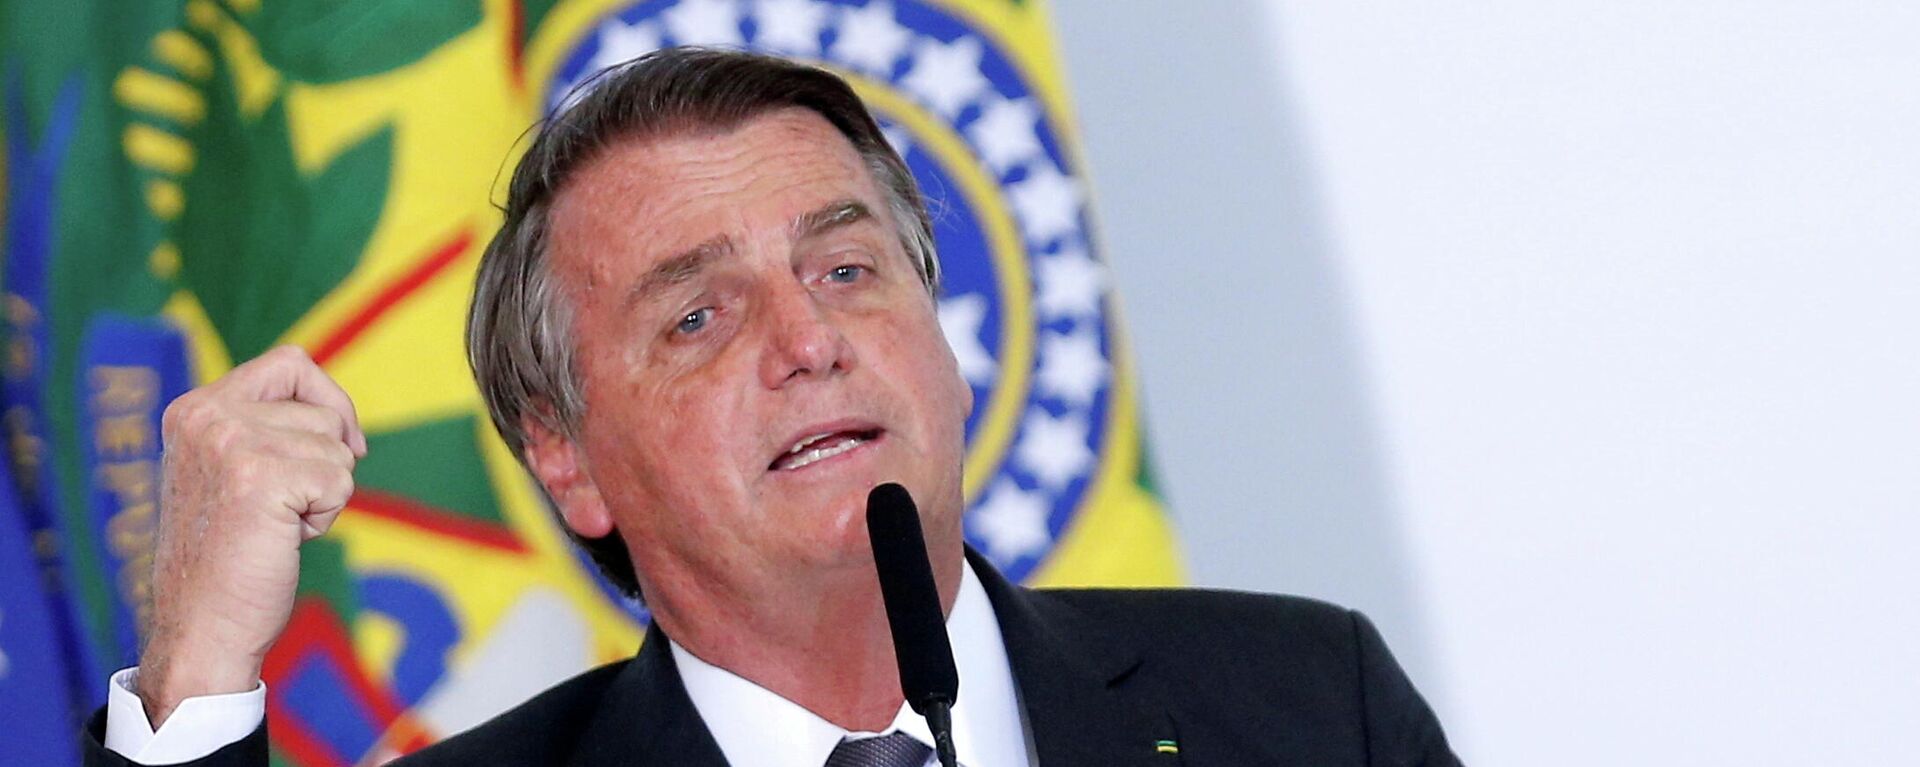 Jair Bolsonaro, presidente de Brasil - Sputnik Mundo, 1920, 20.07.2021